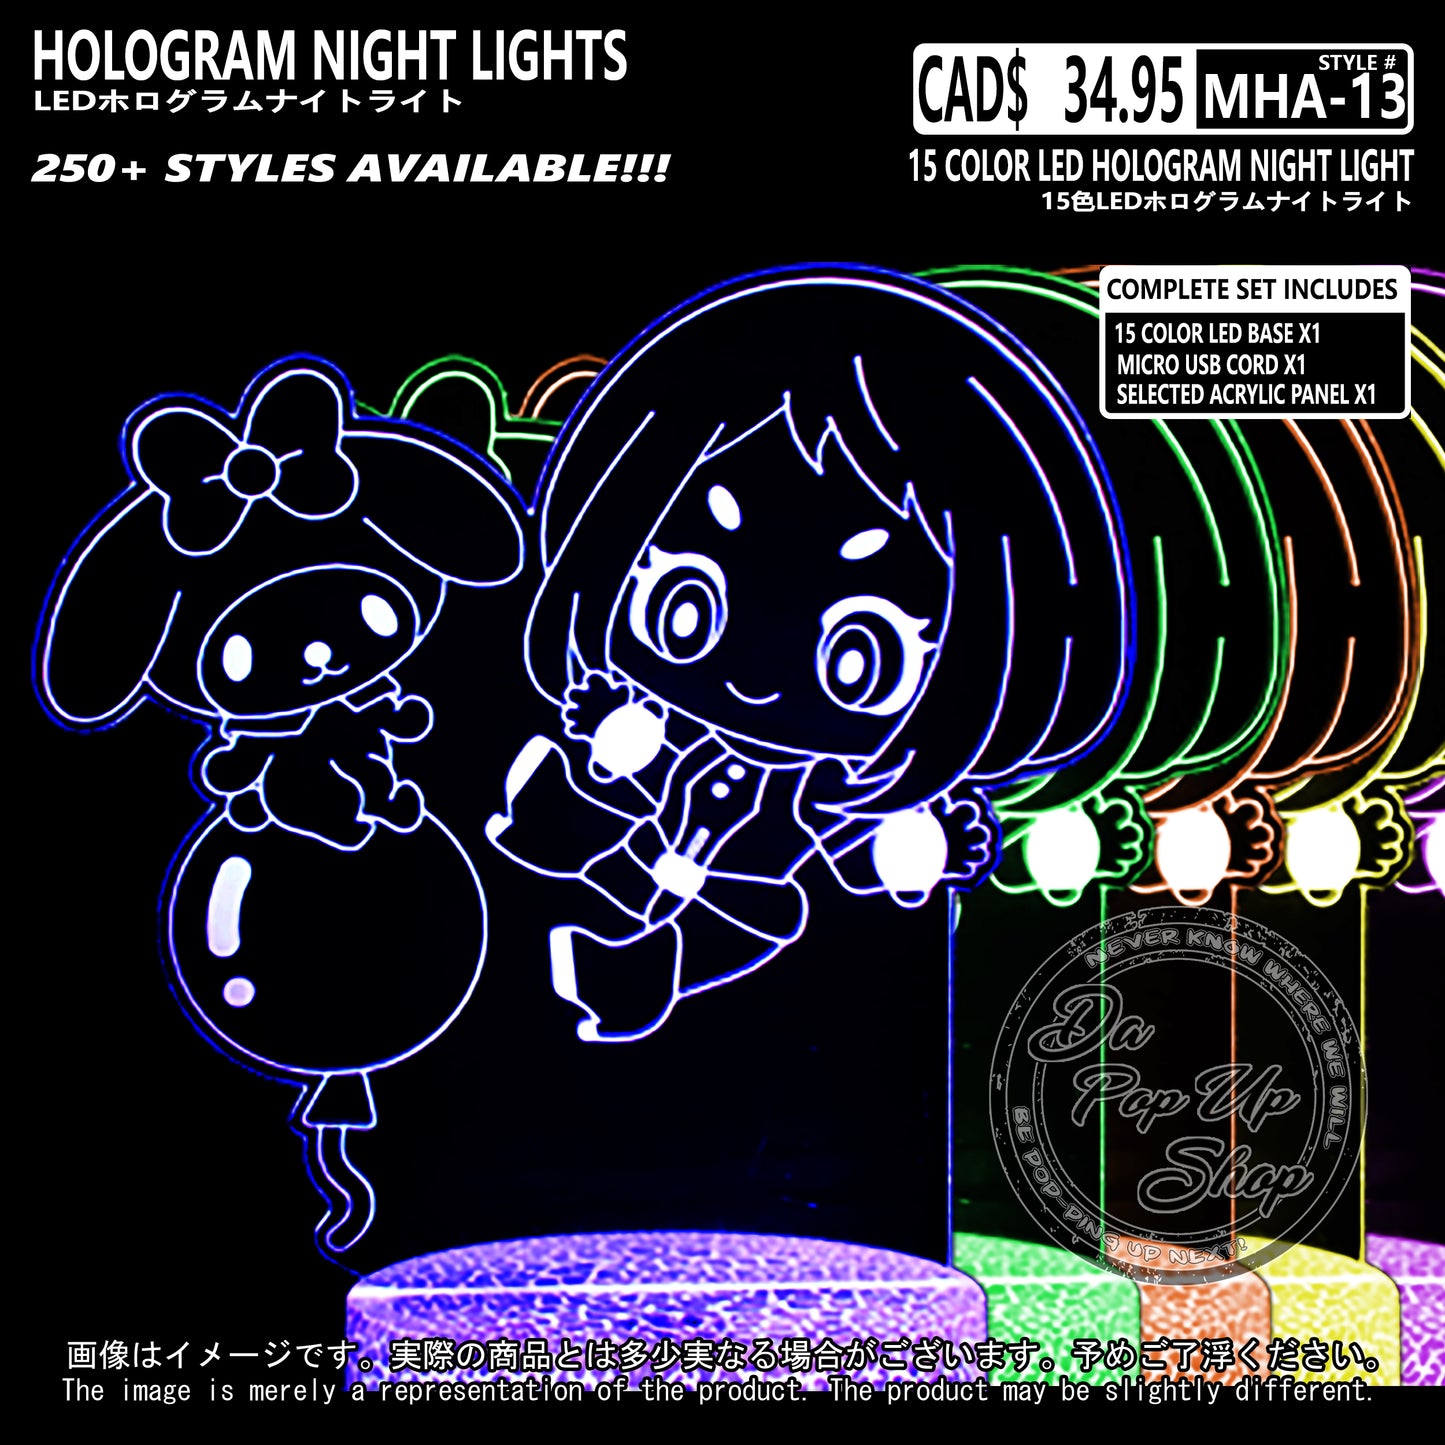 (MHA-13) My Hero Academia Hologram LED Night Light